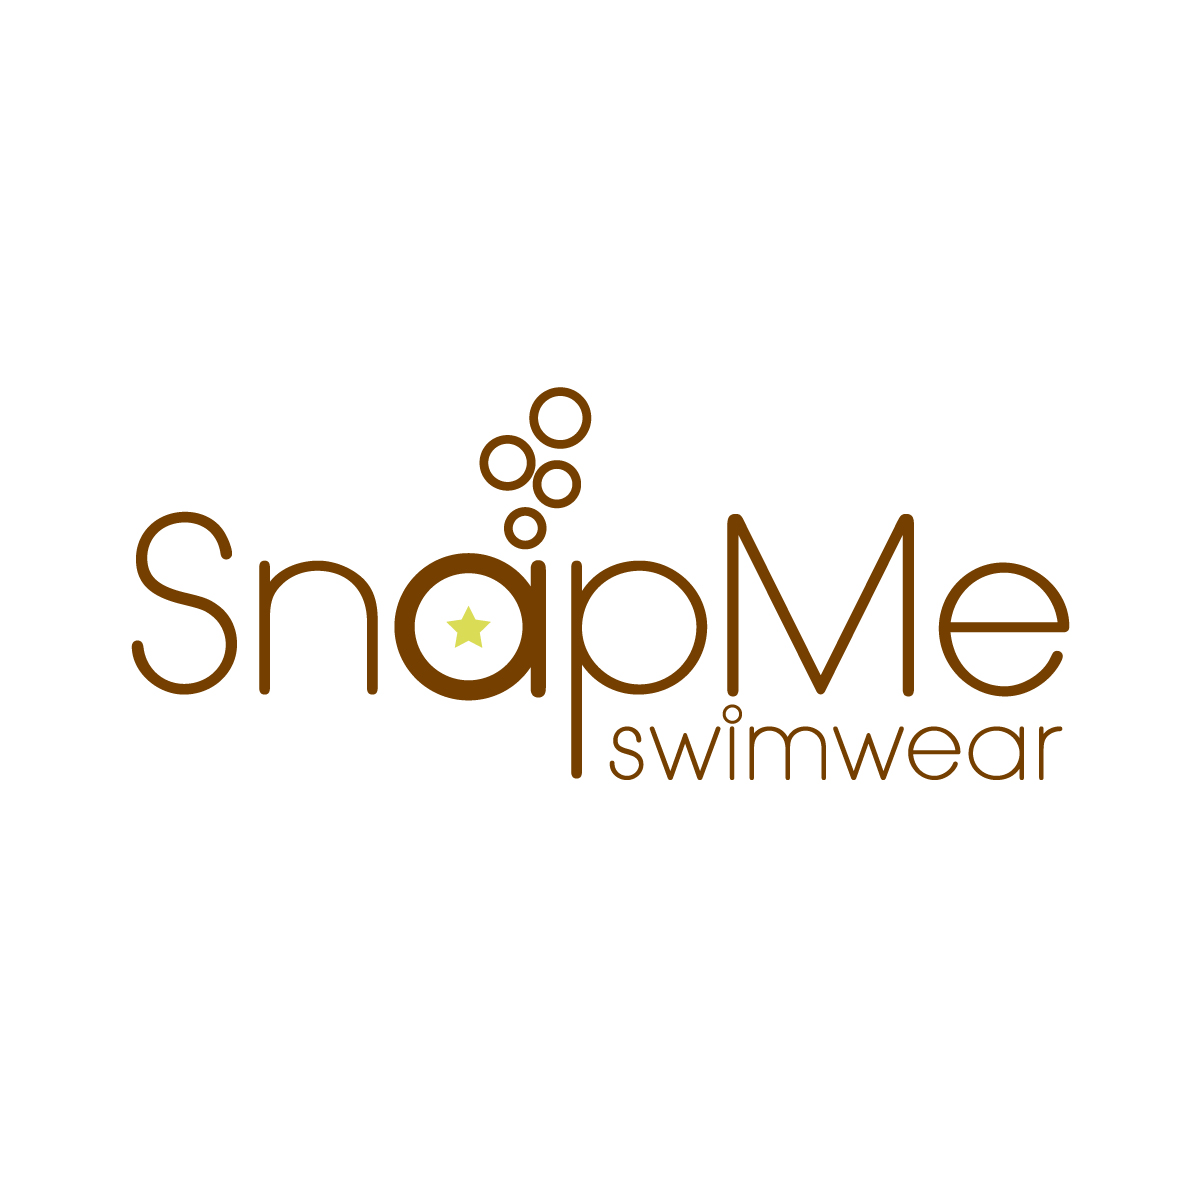 SnapMe Swimwear wordmark logo